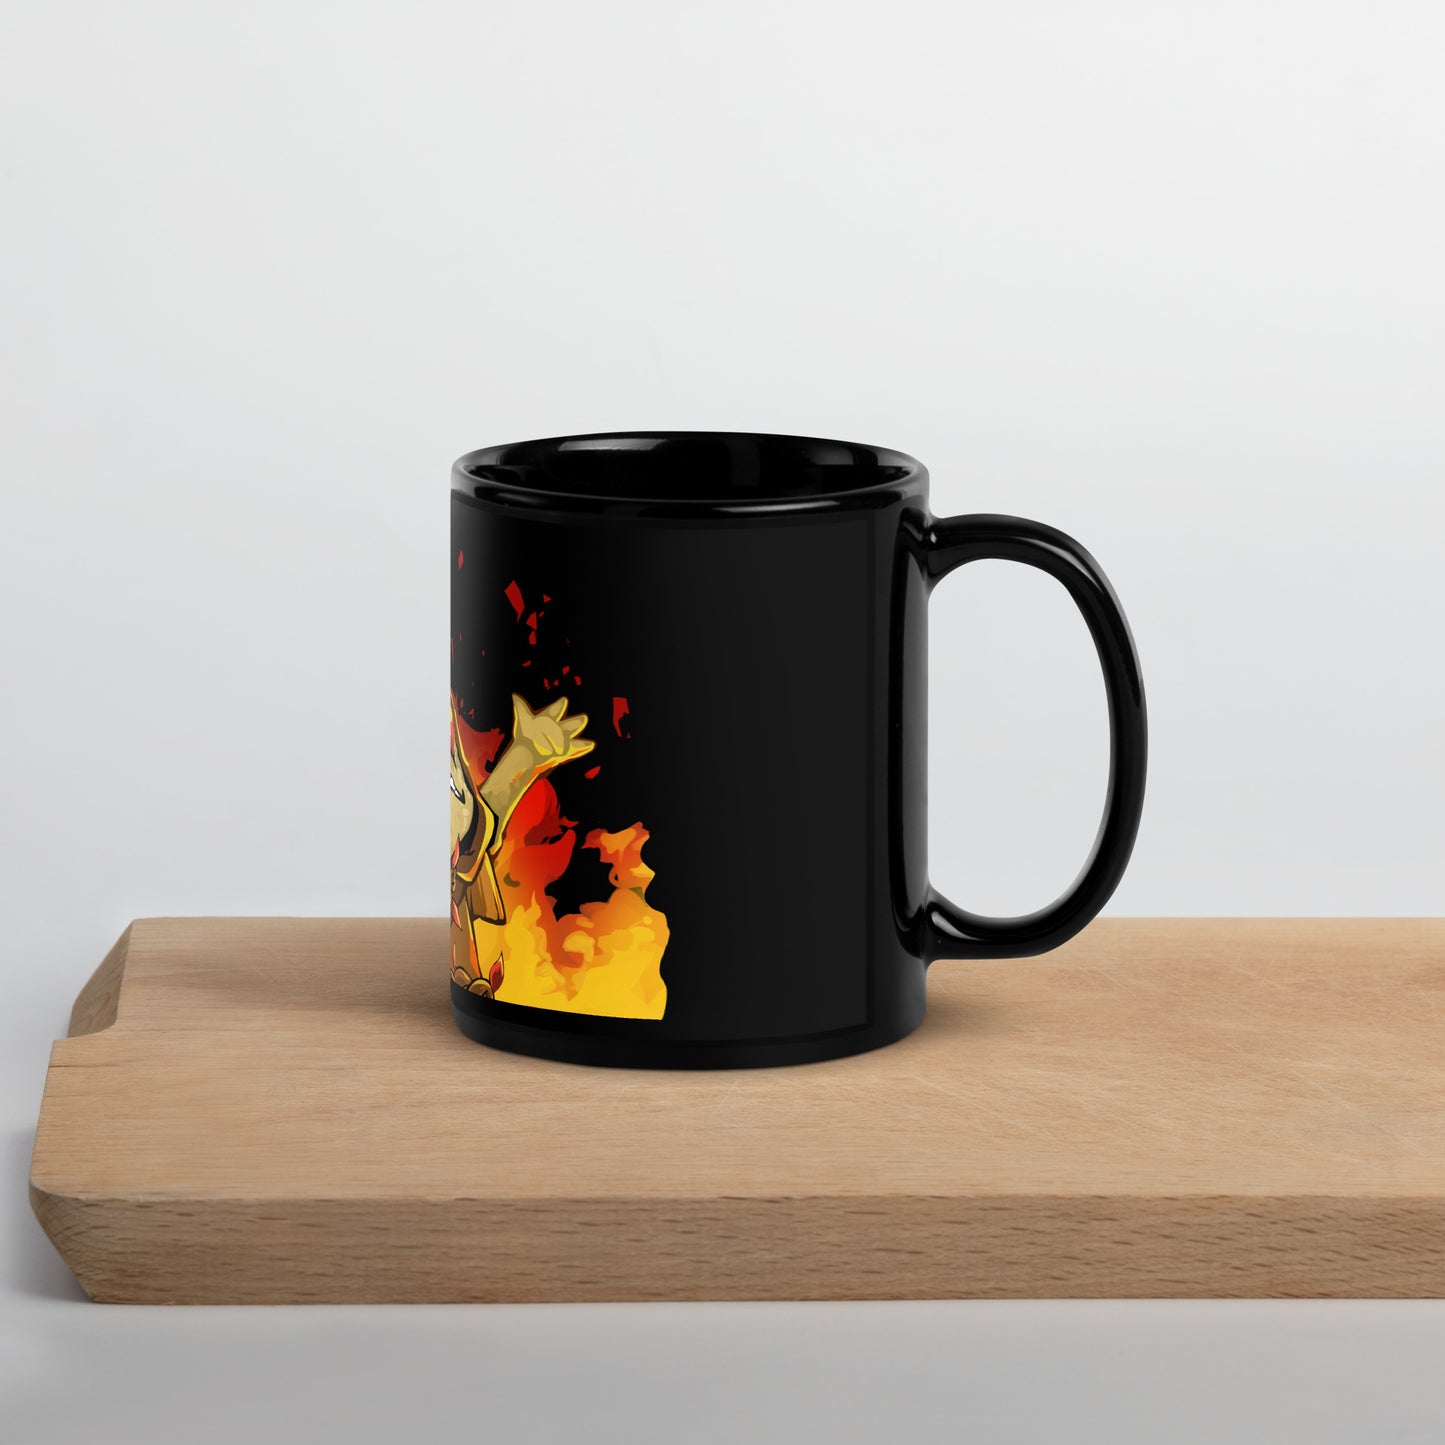 Praise the Firelord - Mug